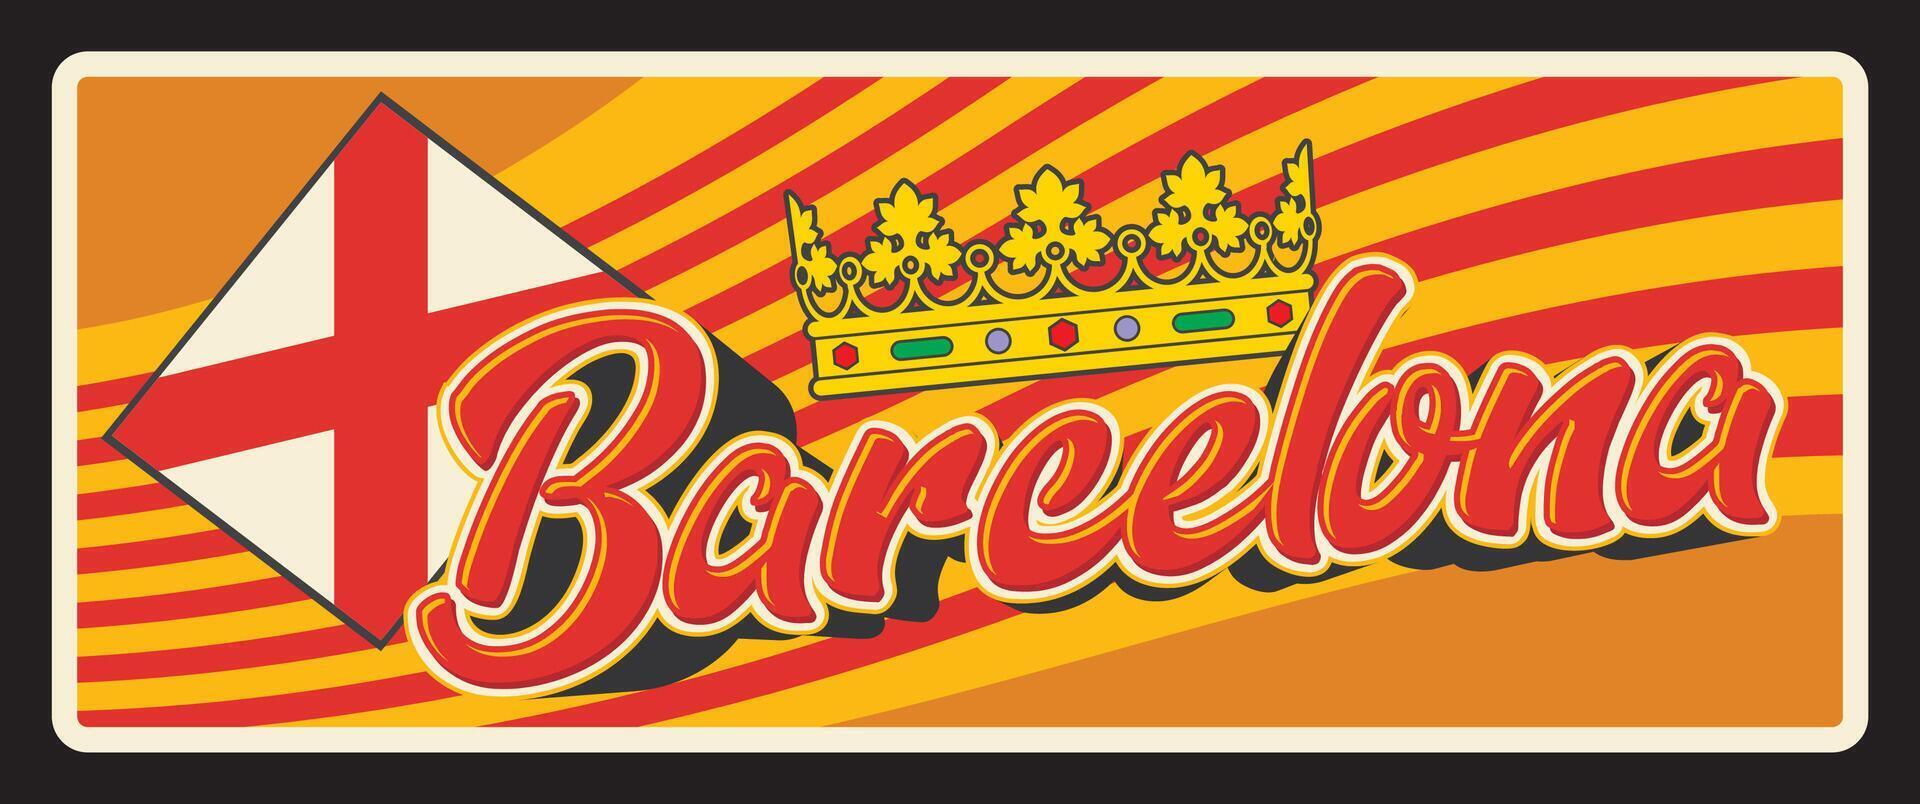 Spain Barcelona spanish city retro travel plate vector